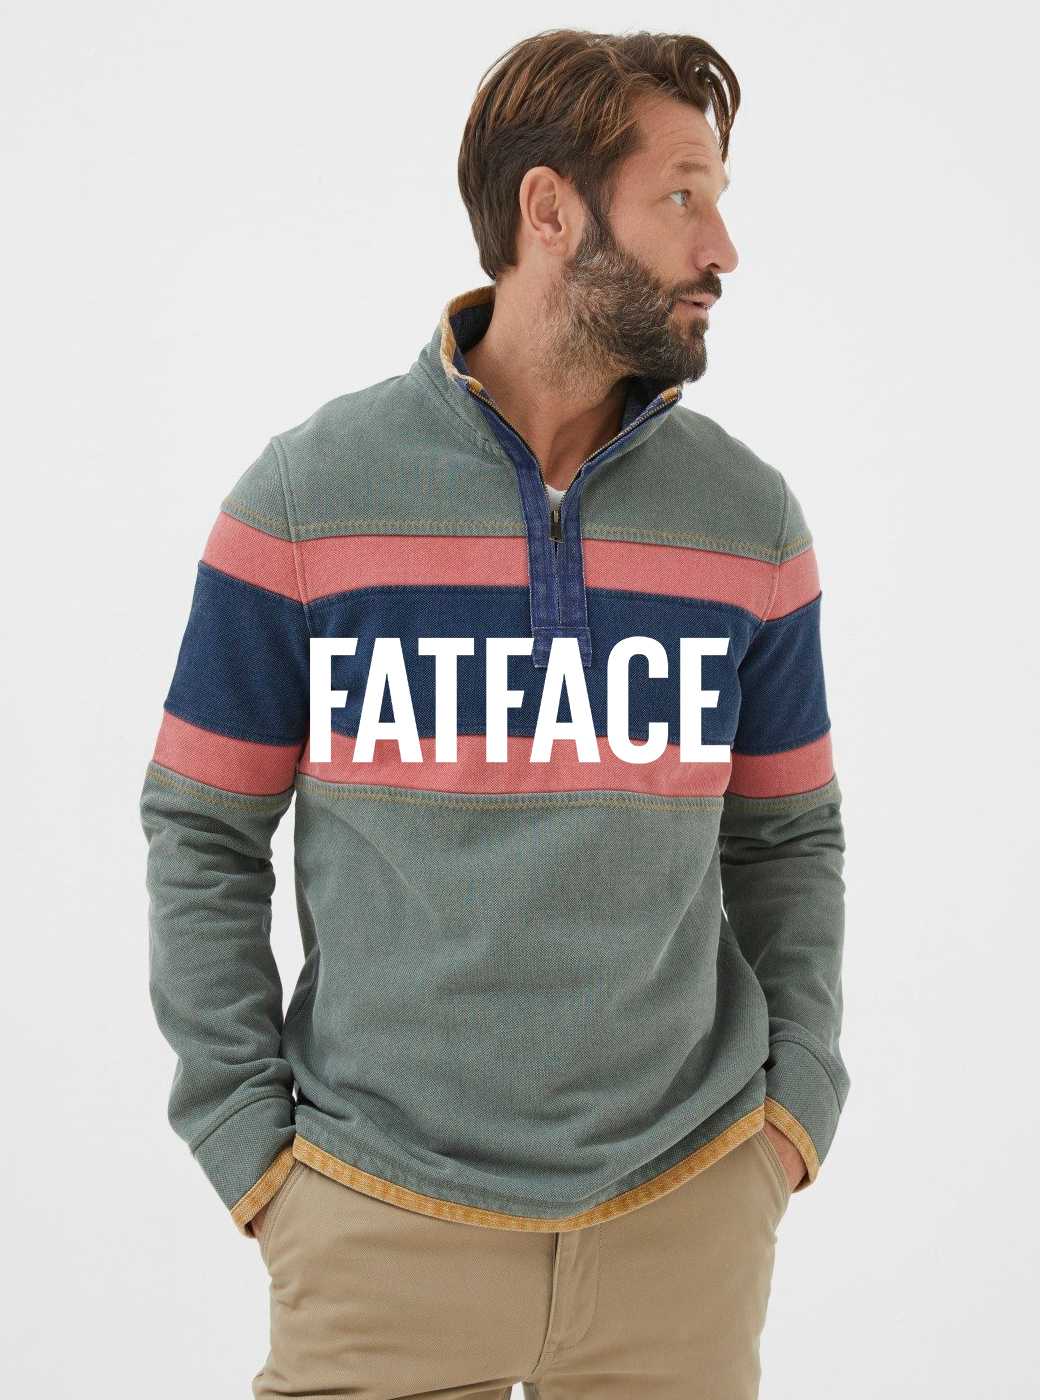 Shop FatFace.